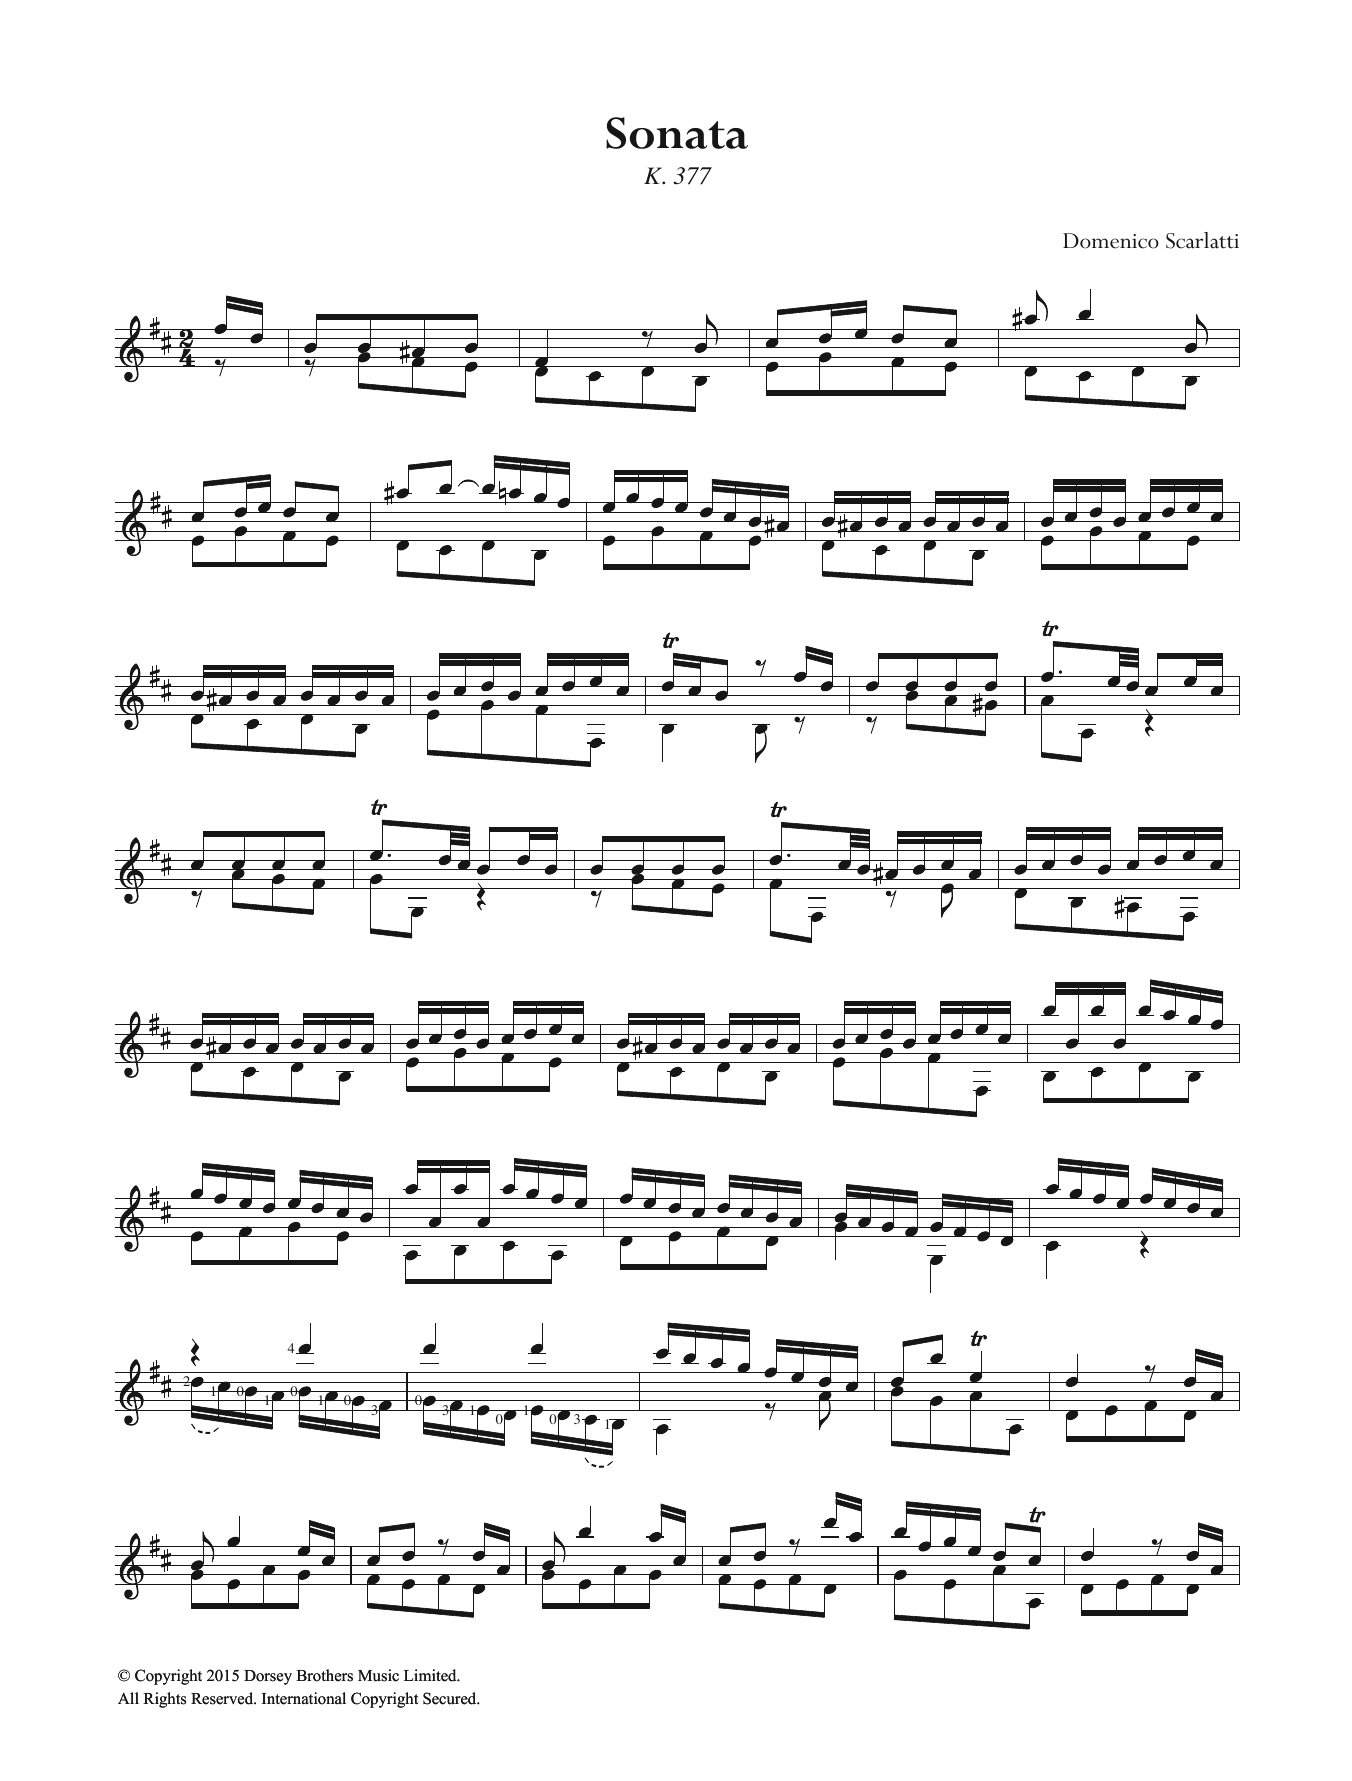 Download Domenico Scarlatti Sonata K.377 Sheet Music and learn how to play Guitar PDF digital score in minutes